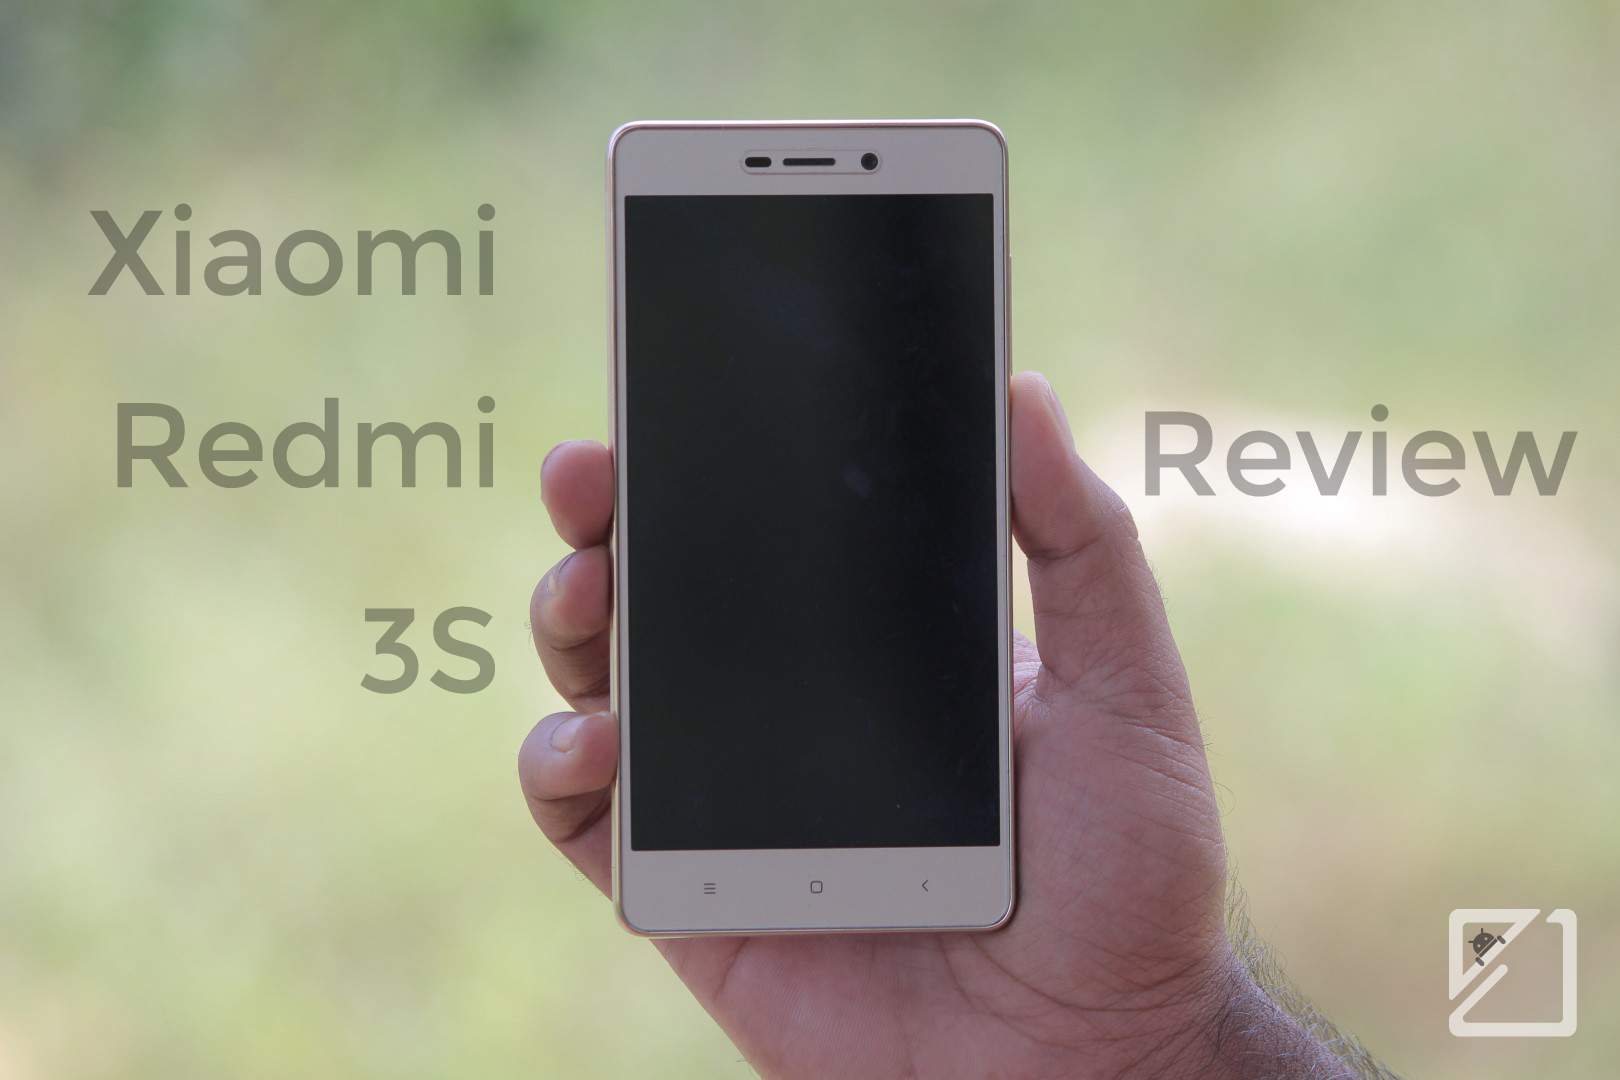 Xiaomi redmi 3s review